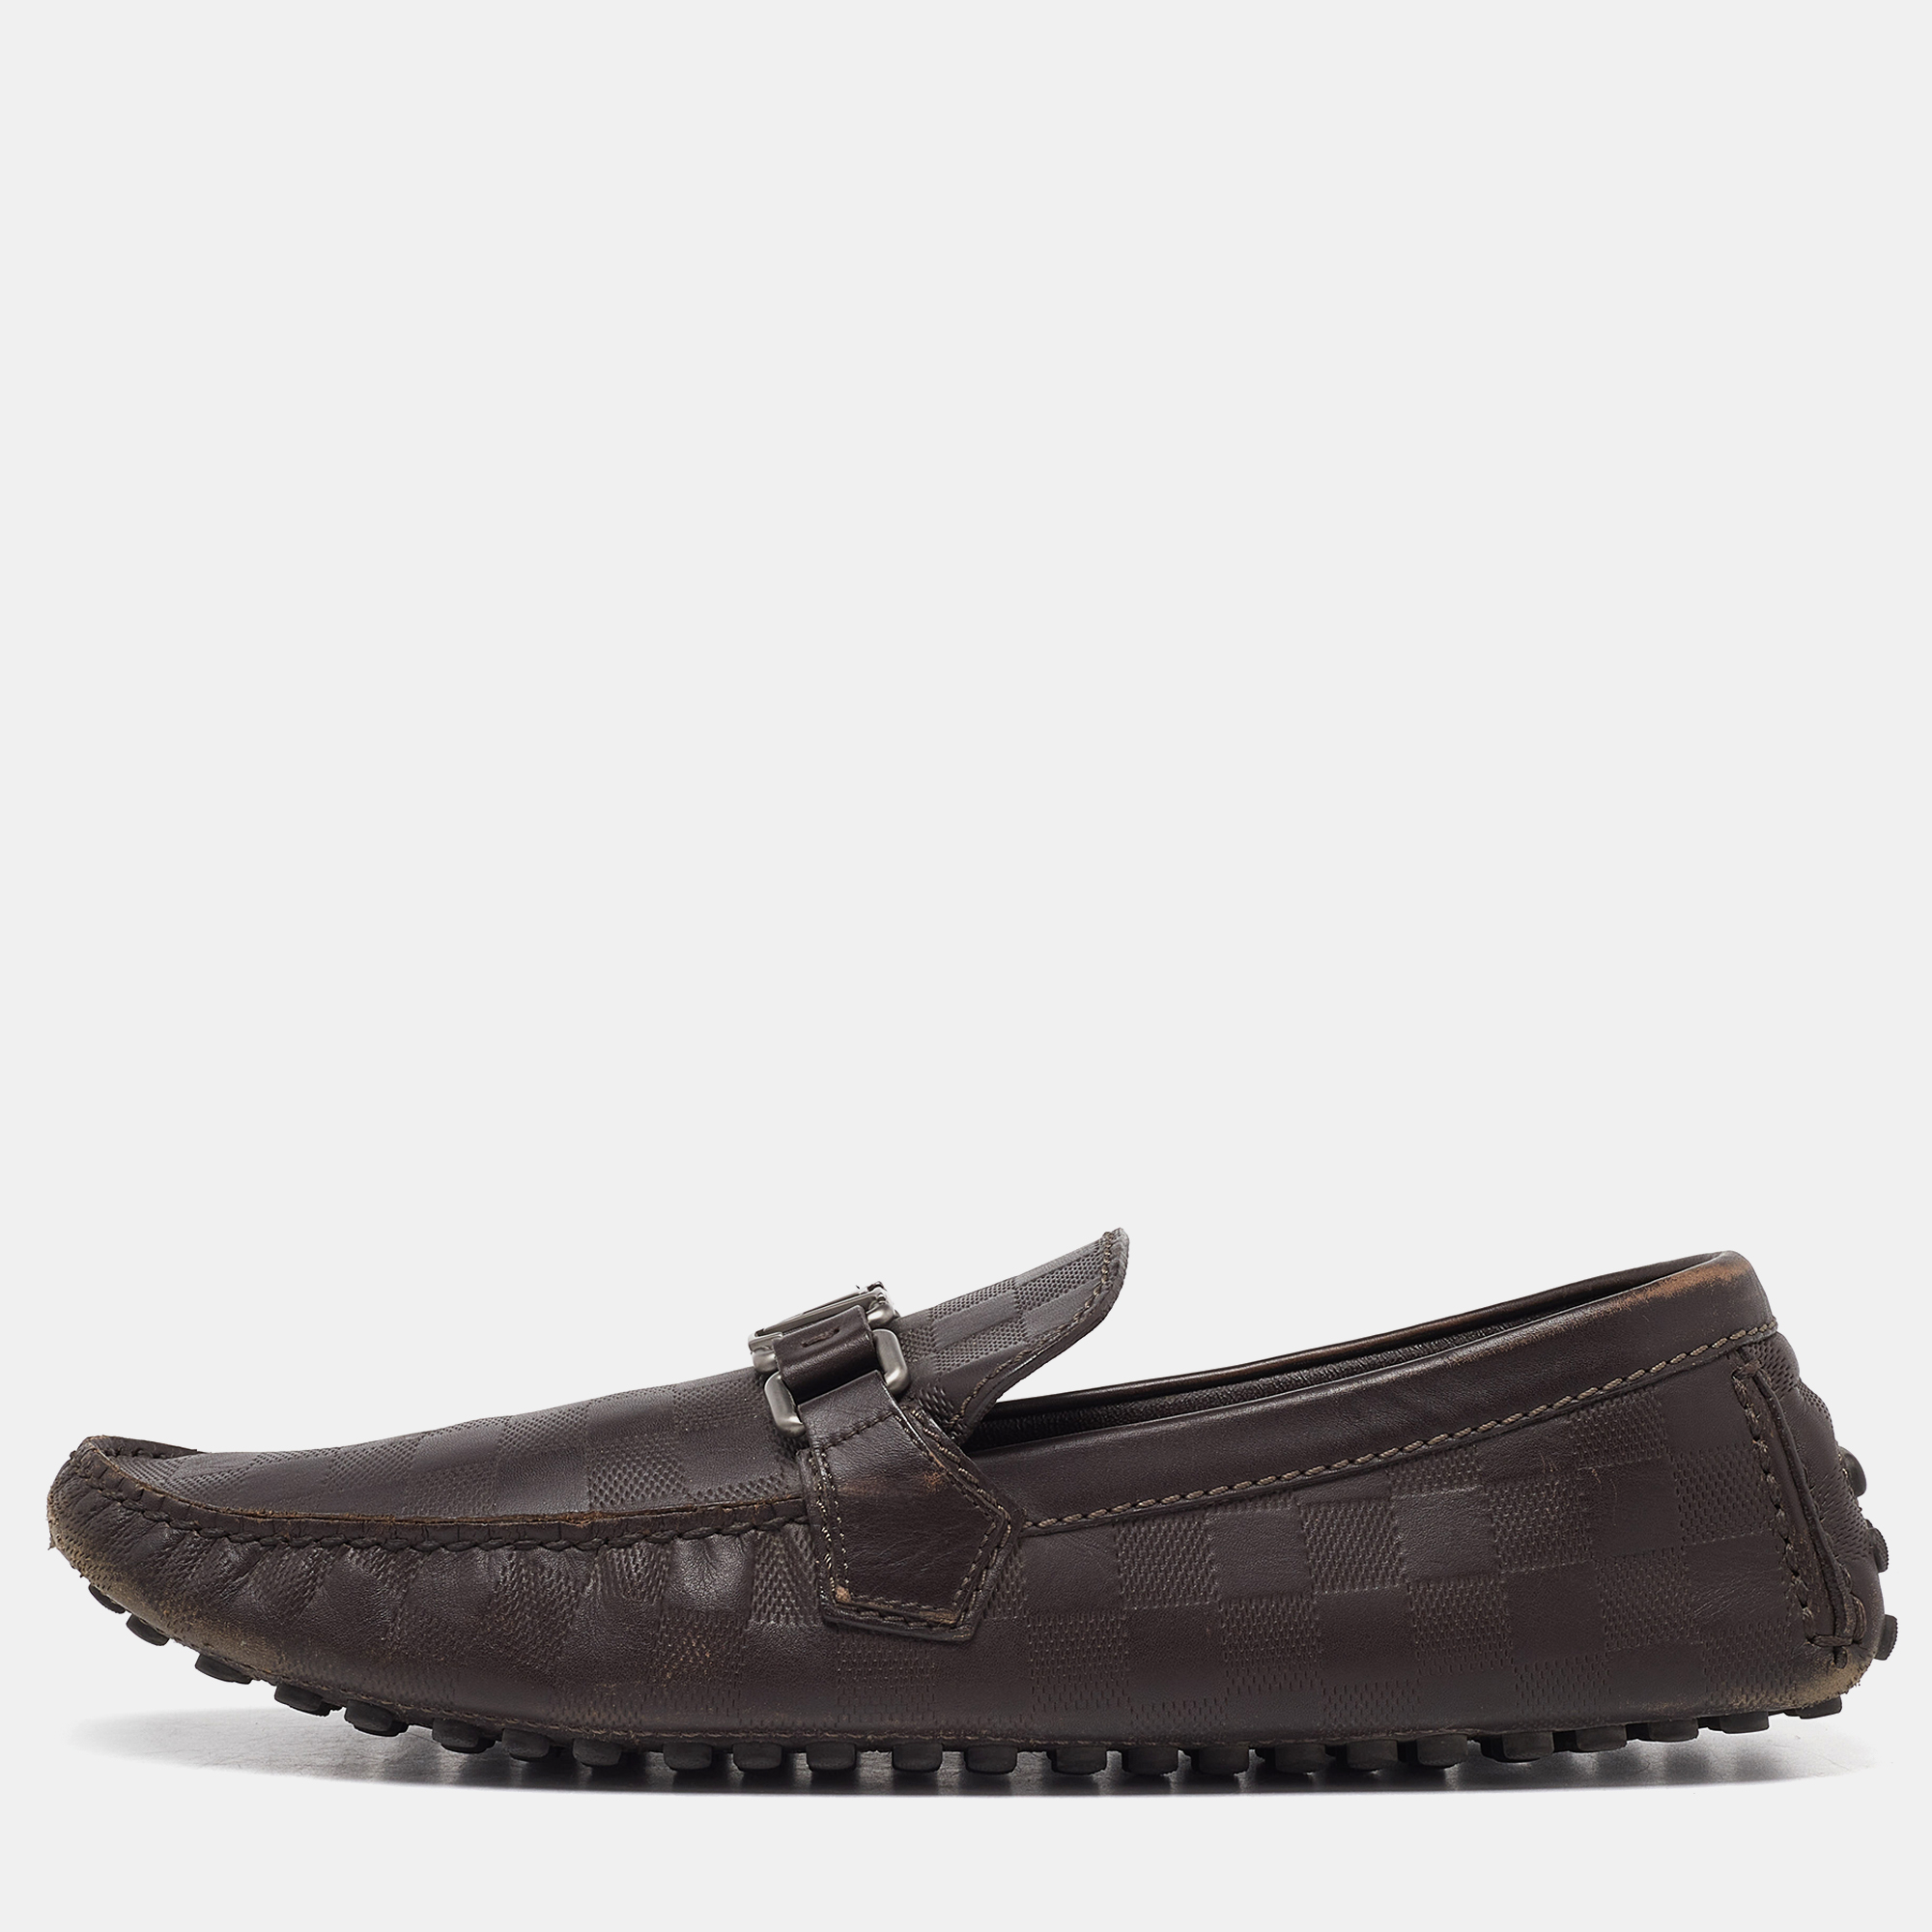 Louis vuitton brown leather hockenheim slip on loafers size 43.5